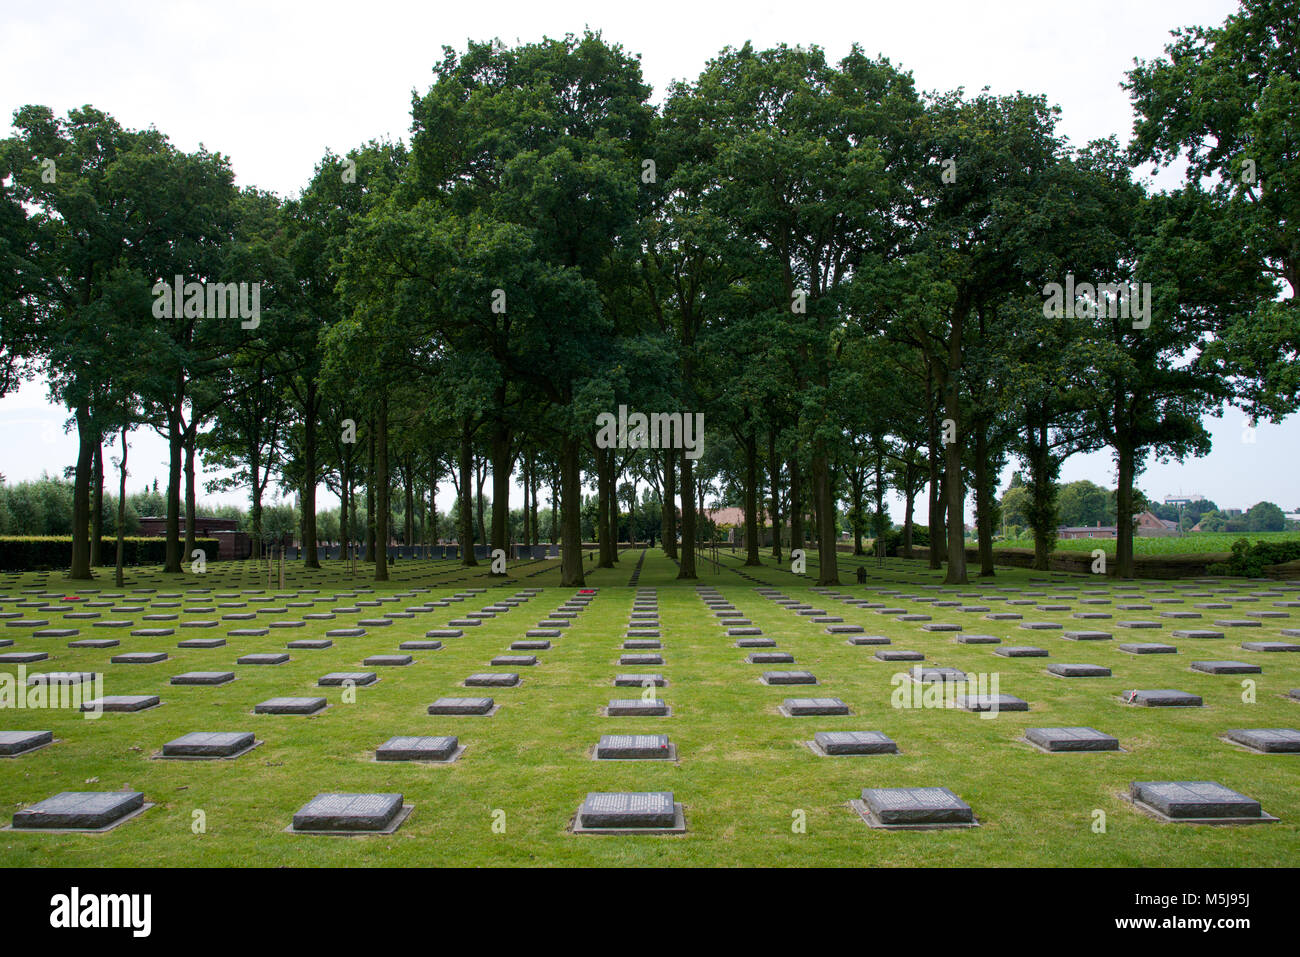 Rows of gravestones at the Langemark German war cemetery Stock Photo